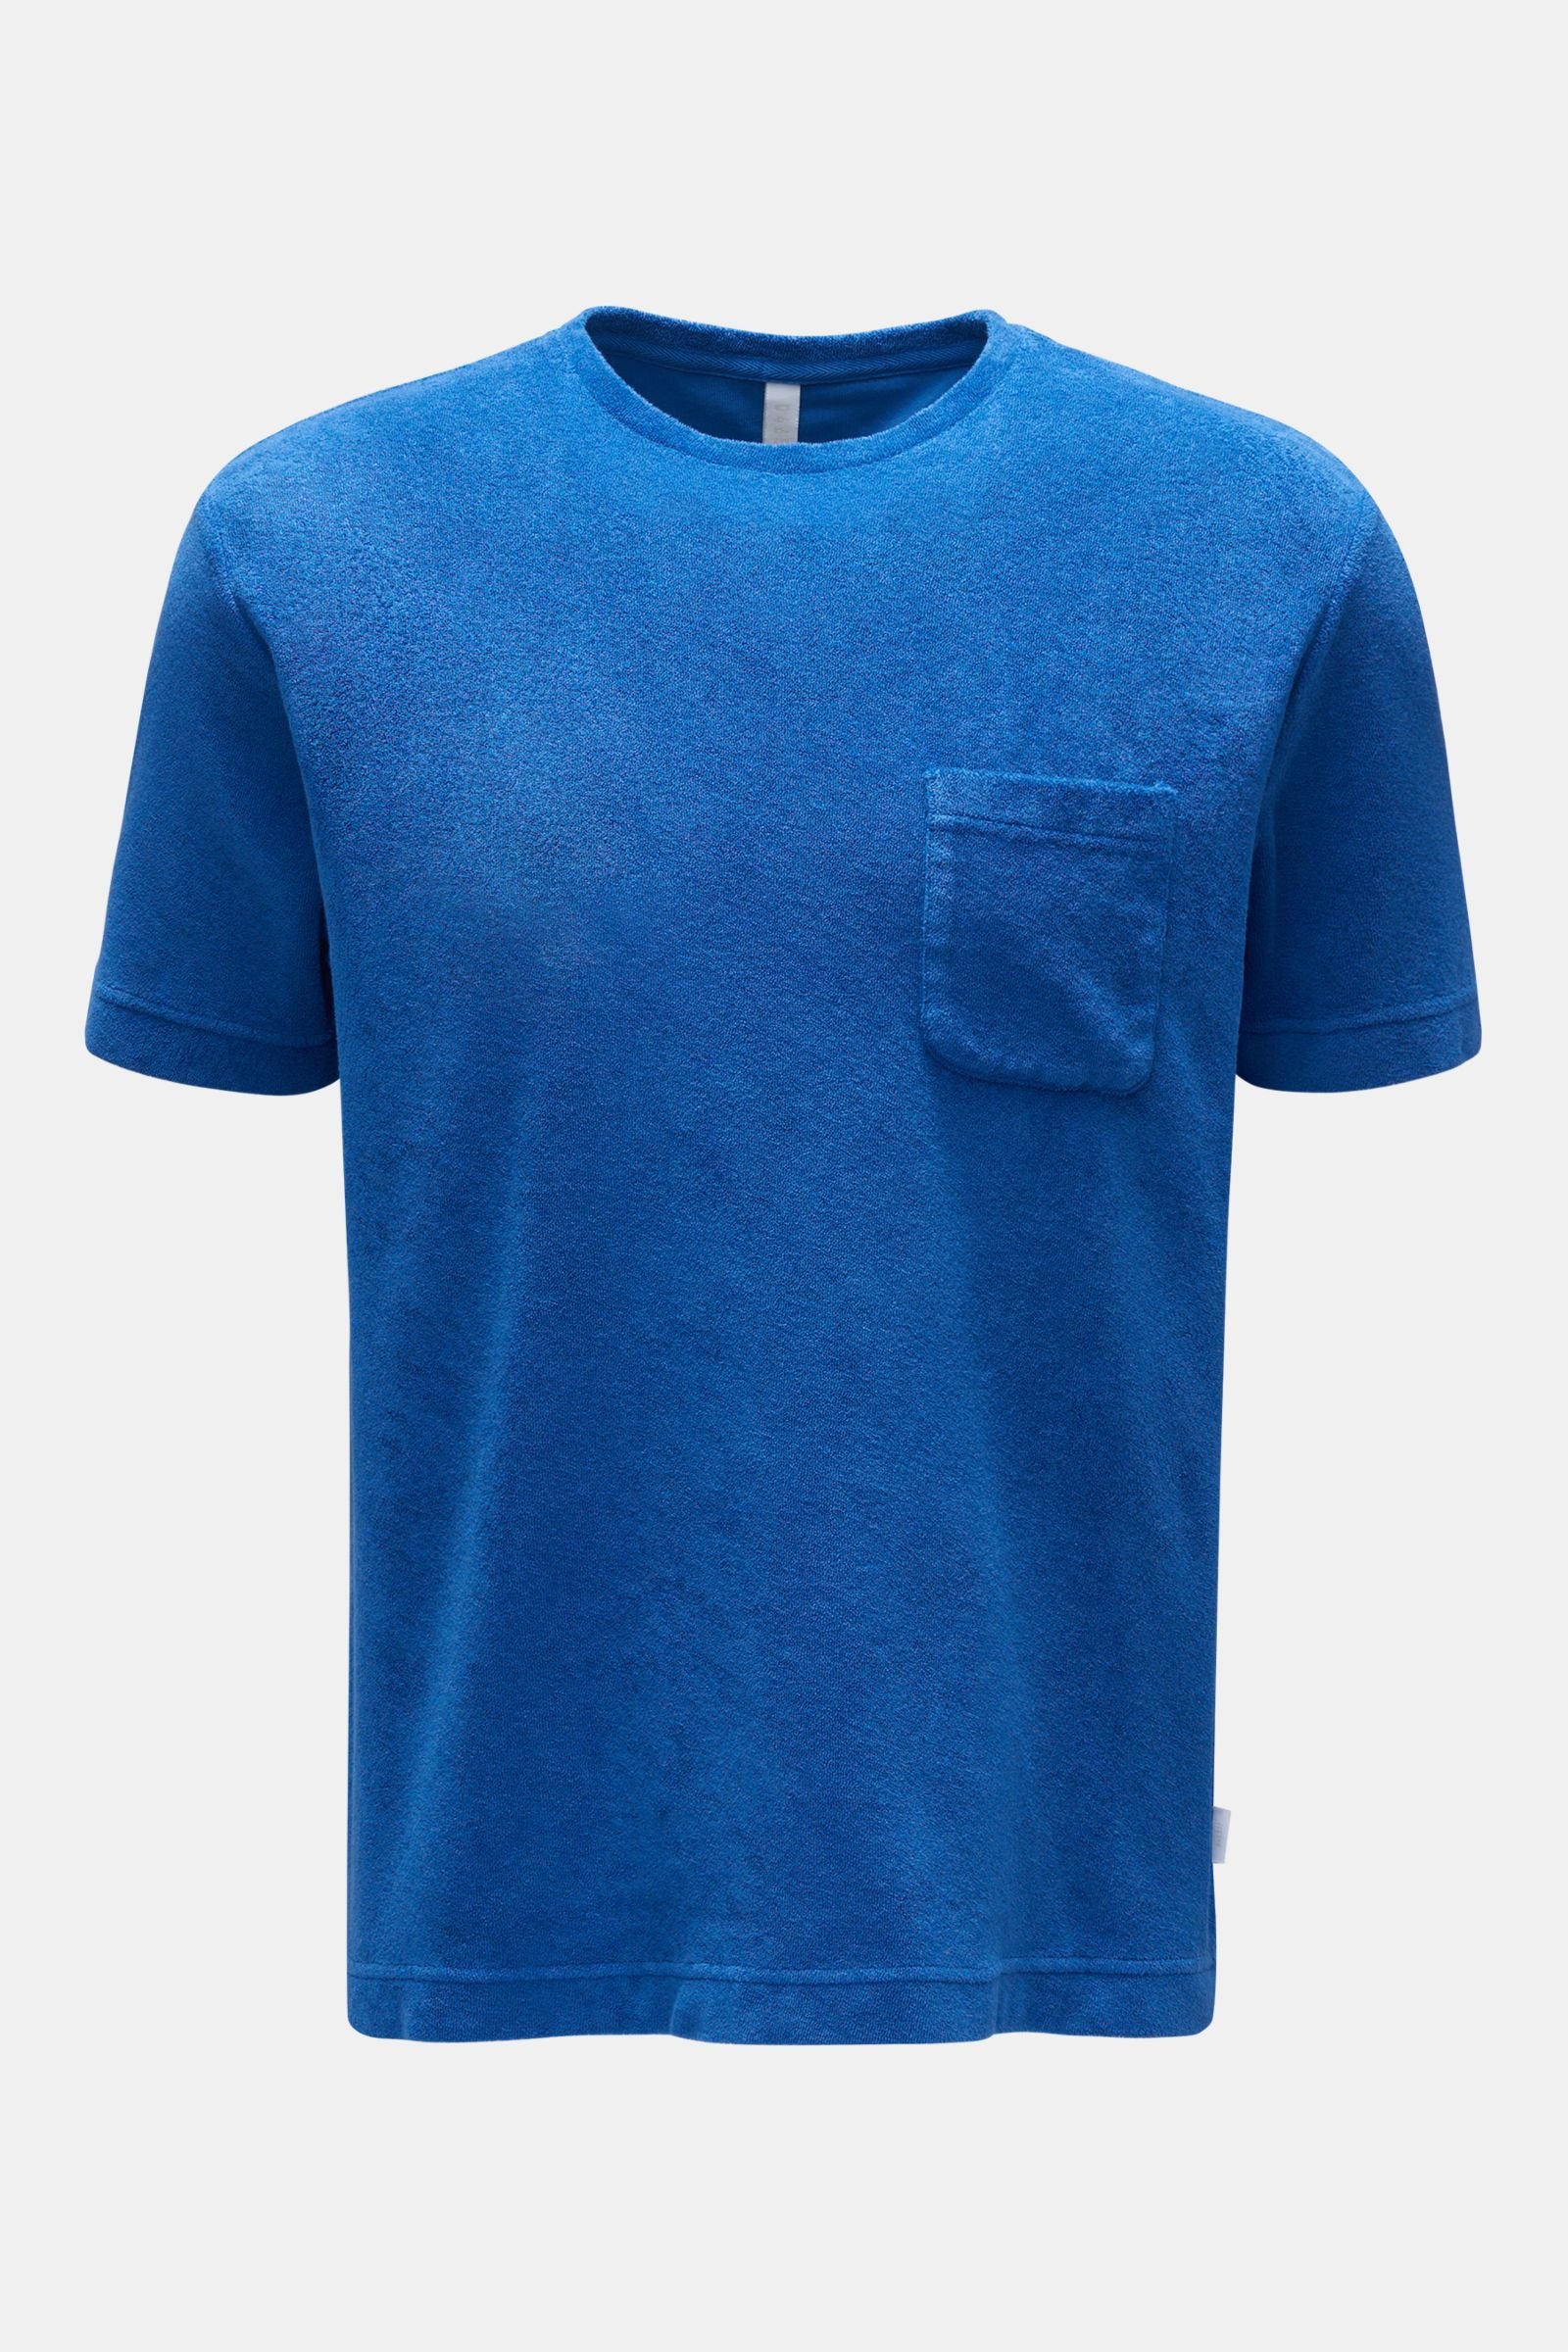 Terry crew neck T-shirt 'Terry Tee' blue